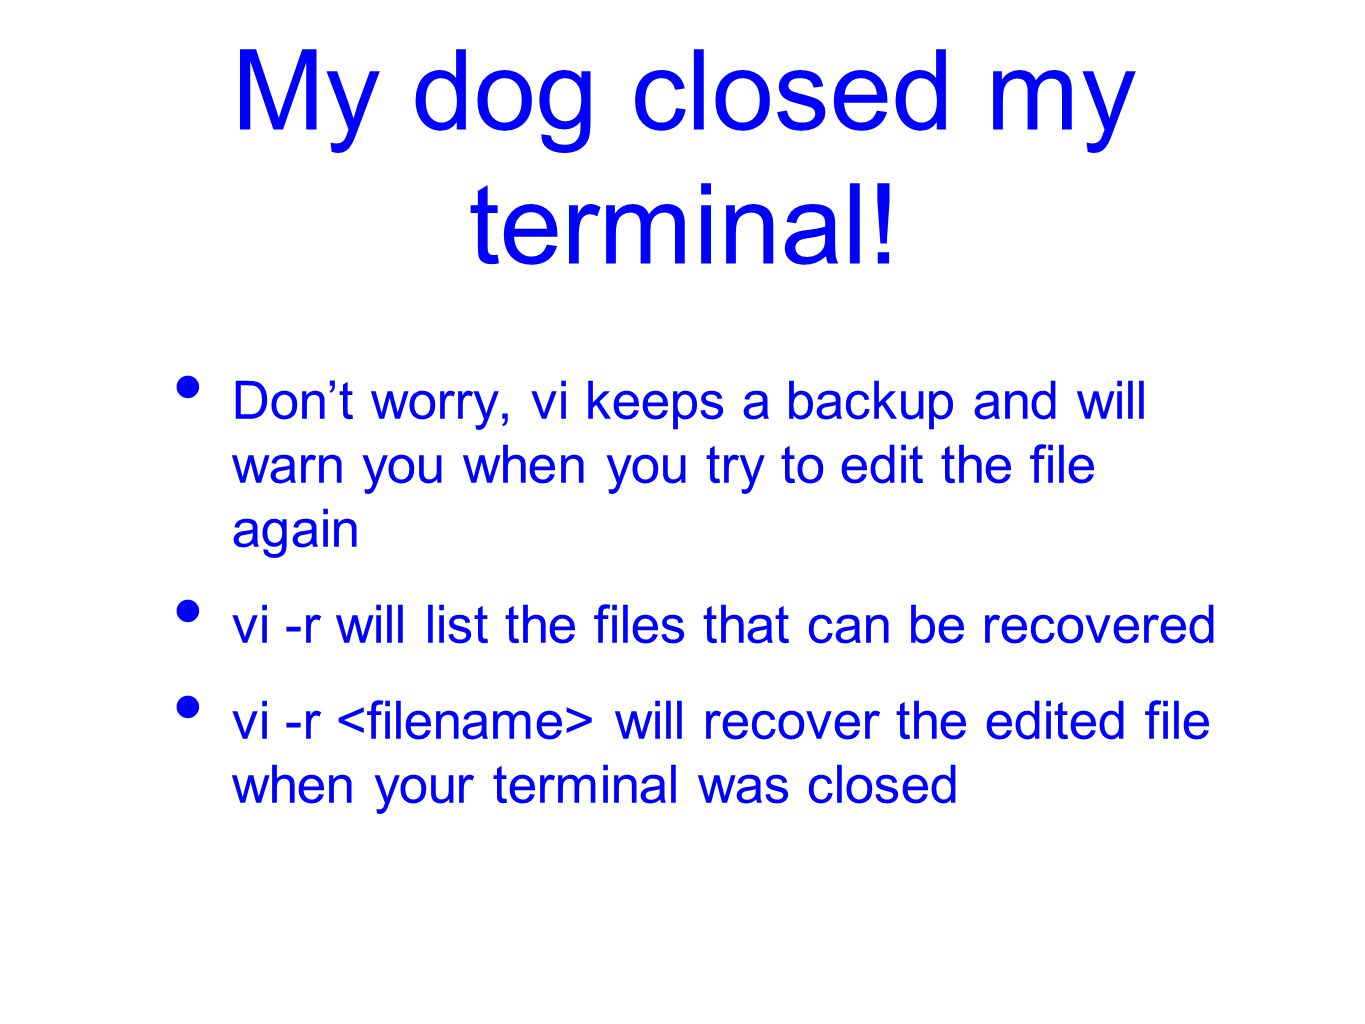 My dog closed my terminal.